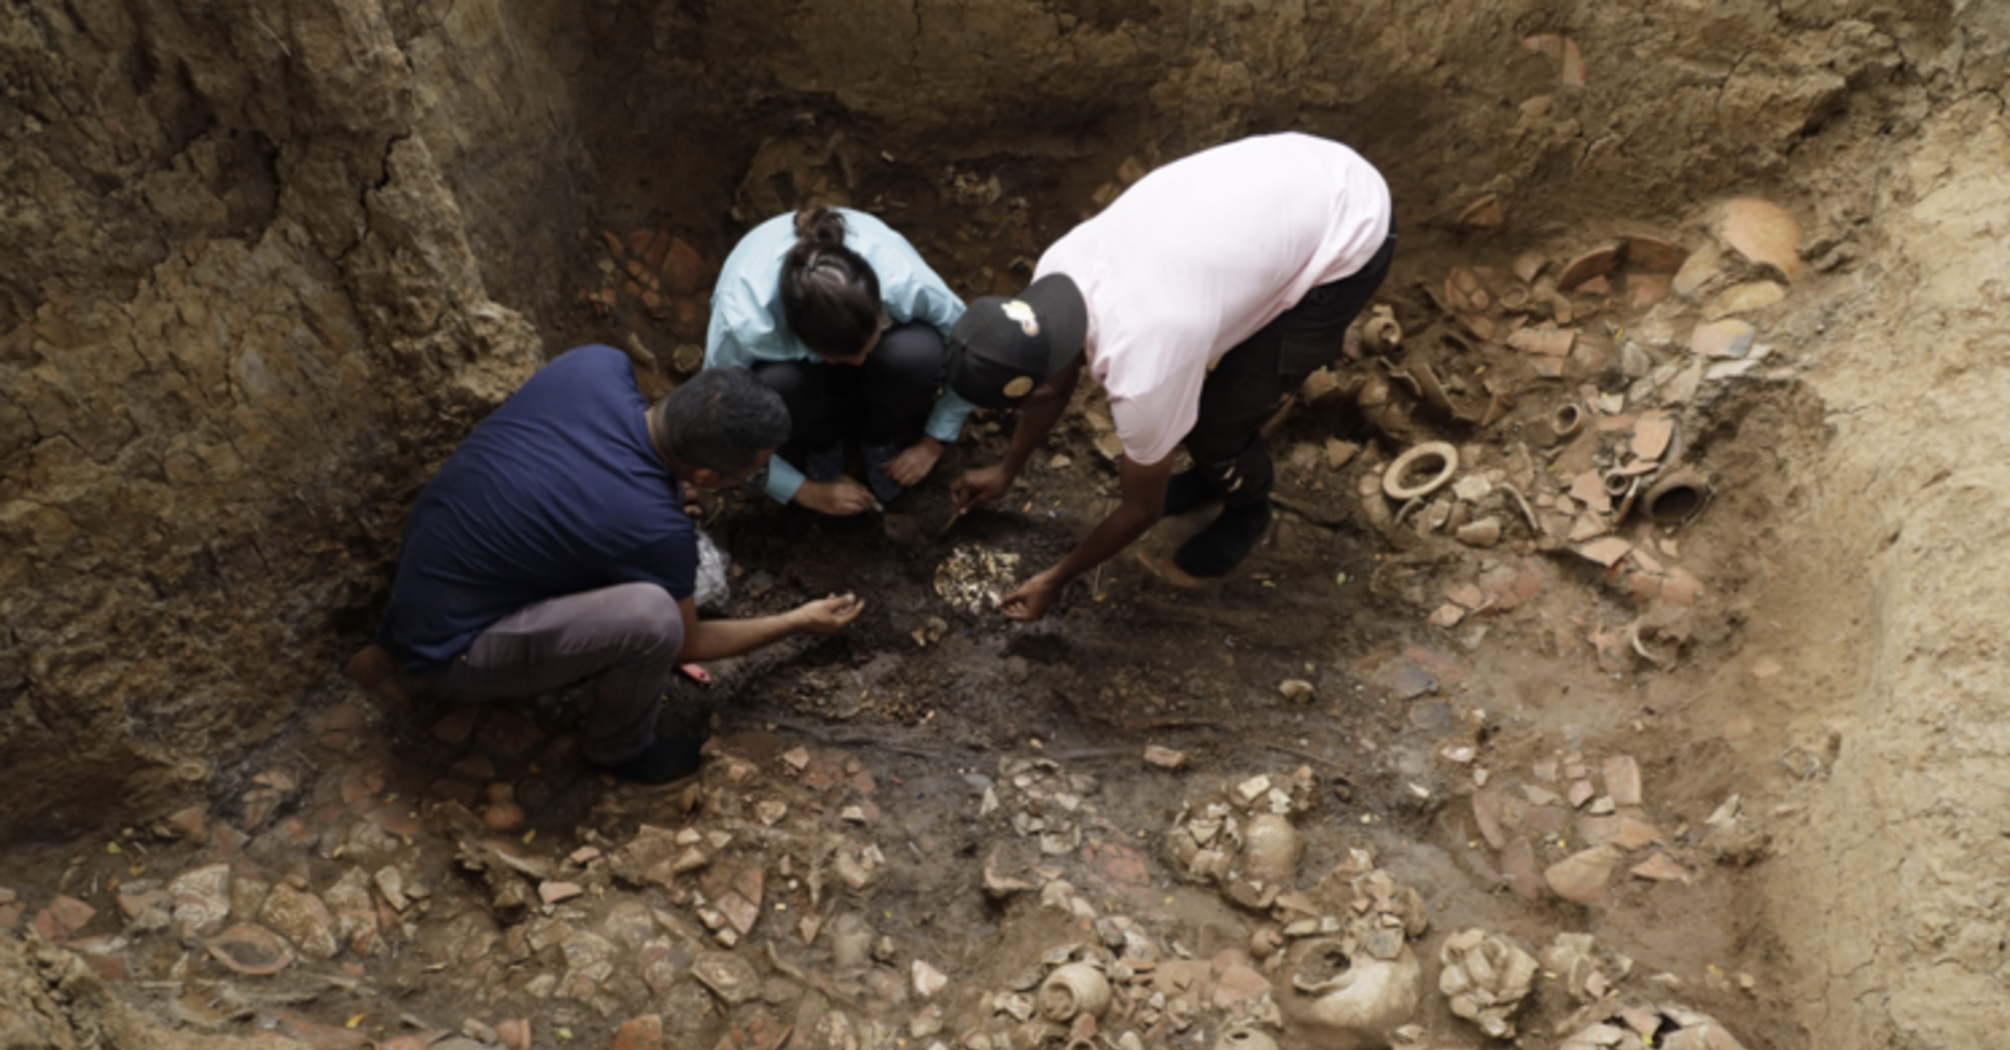 Luxurious tomb reveals horrific rituals of ancient culture